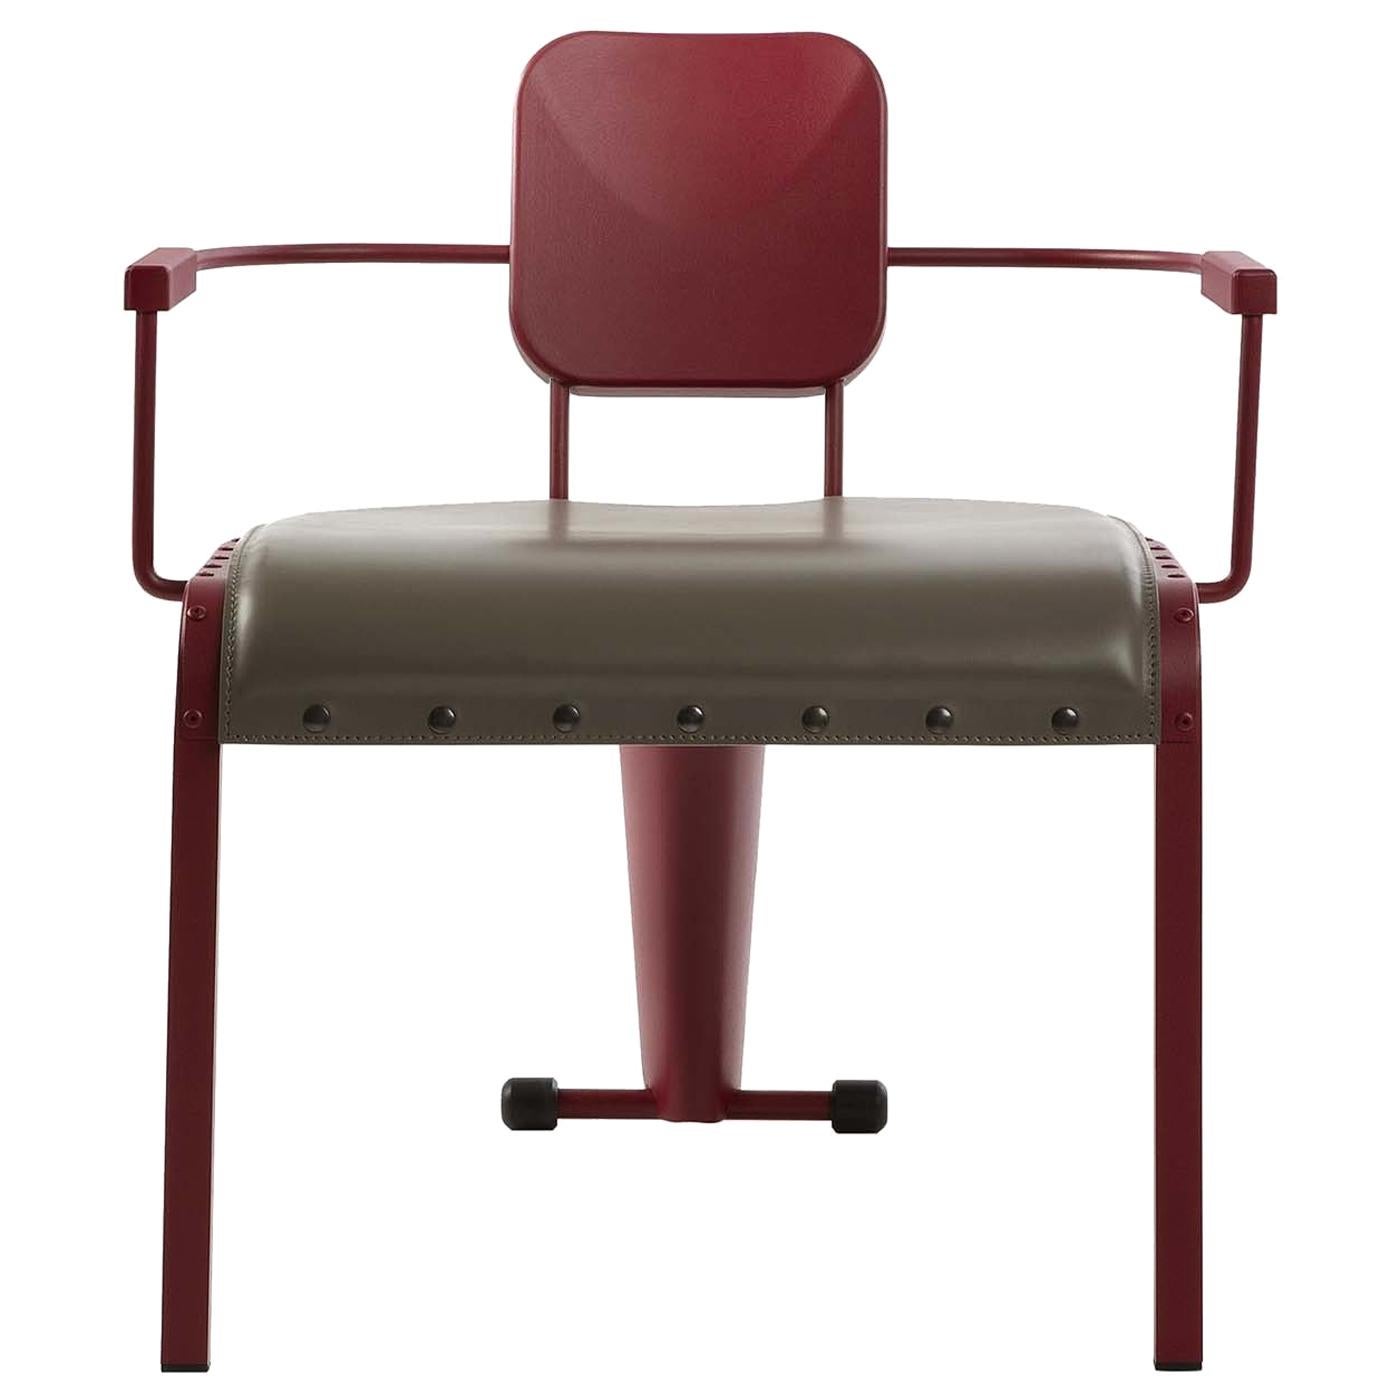 Rock Red Lounge Chair mit grauem ledersitz by Marc Sadler